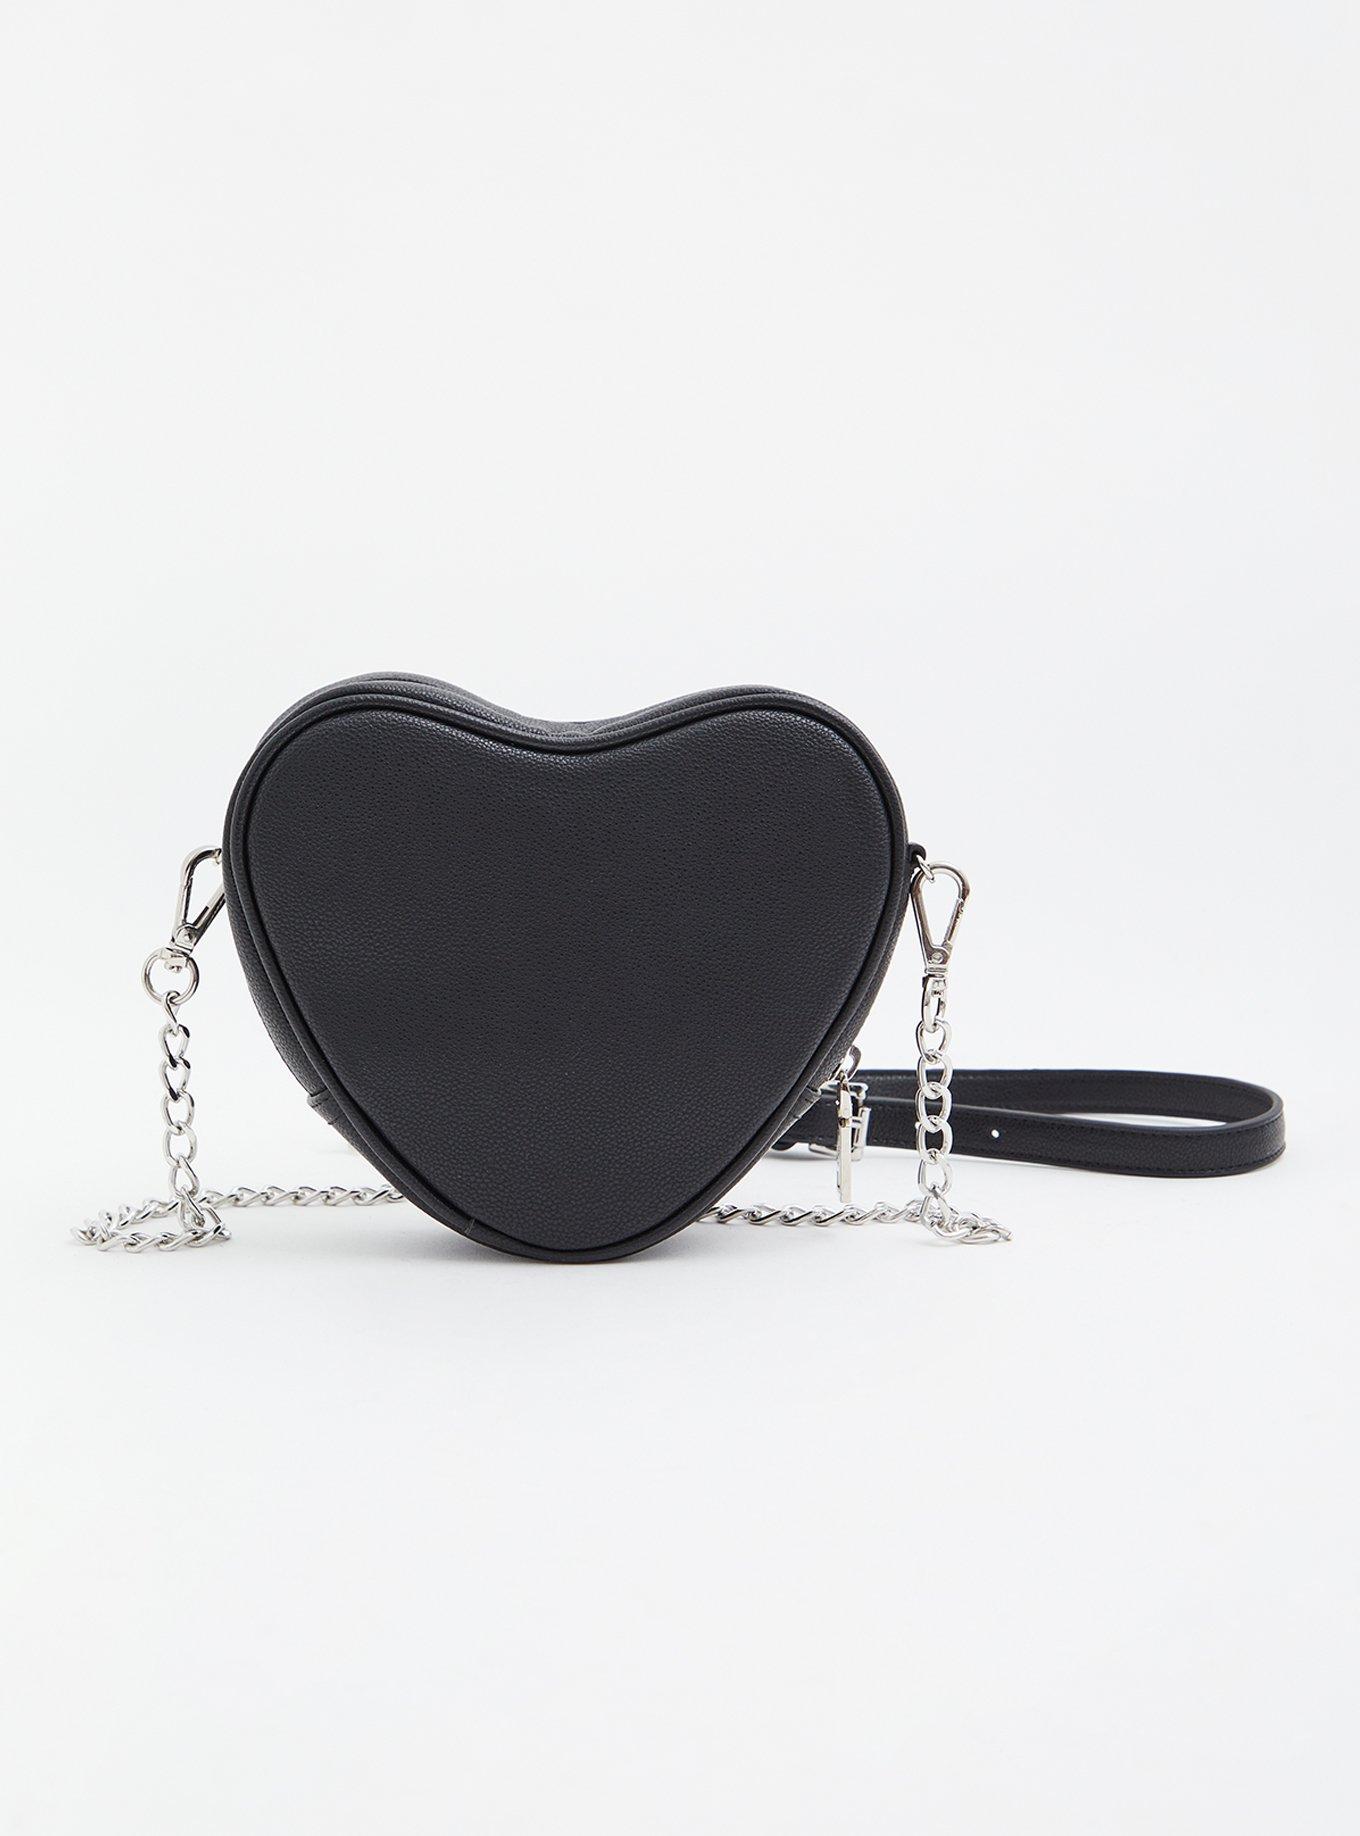 Plus Size - Betsey Johnson Black Faux Leather Studded Heart Crossbody Bag -  Torrid